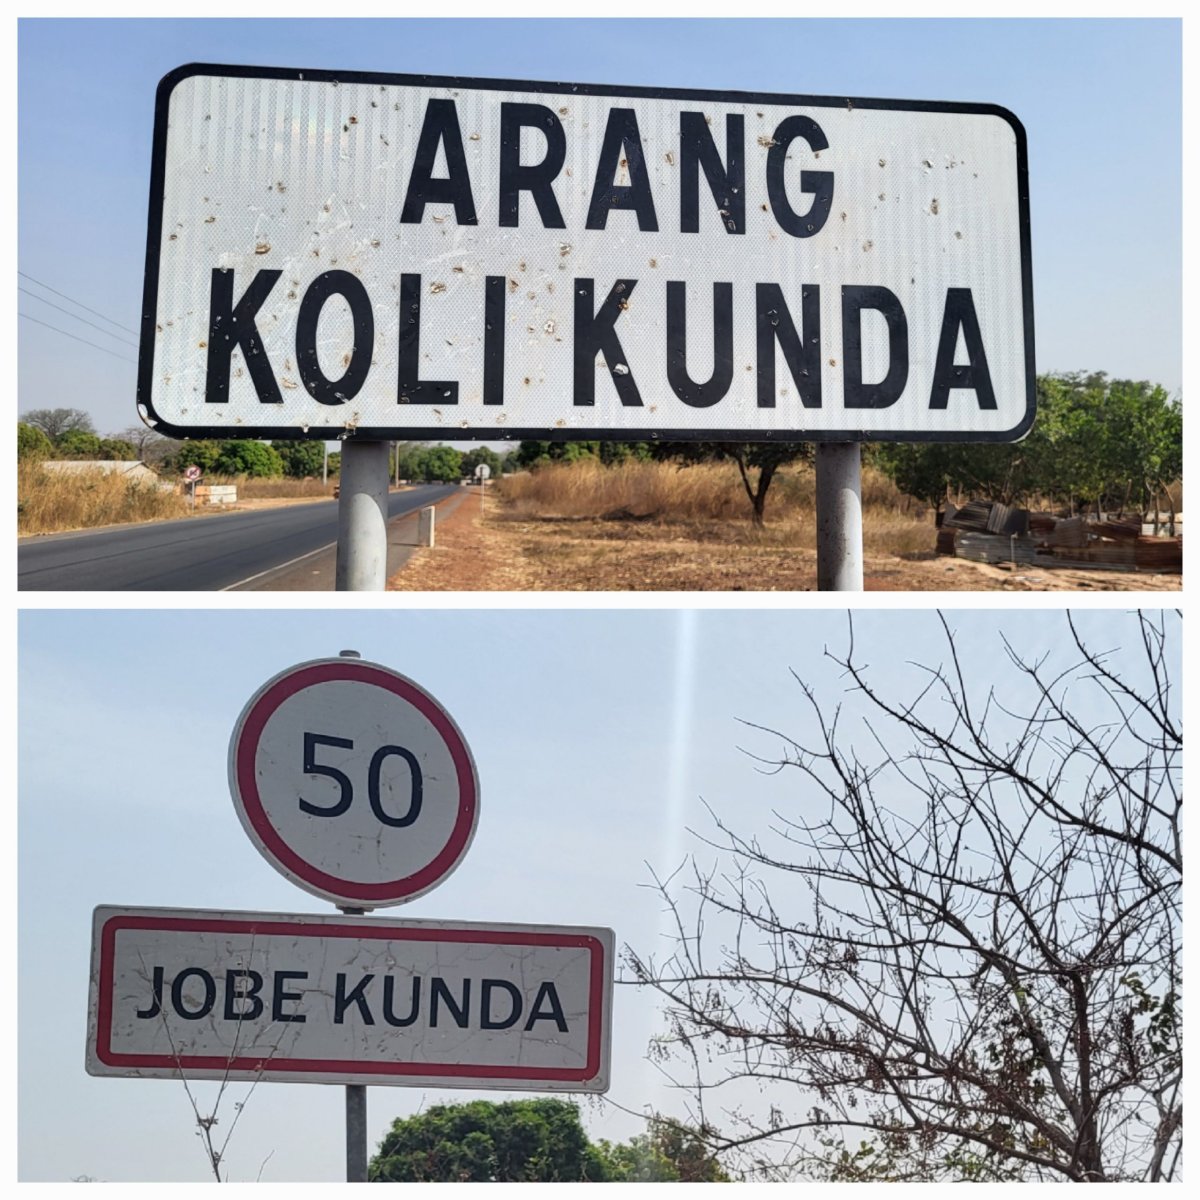 Jobe Kunda